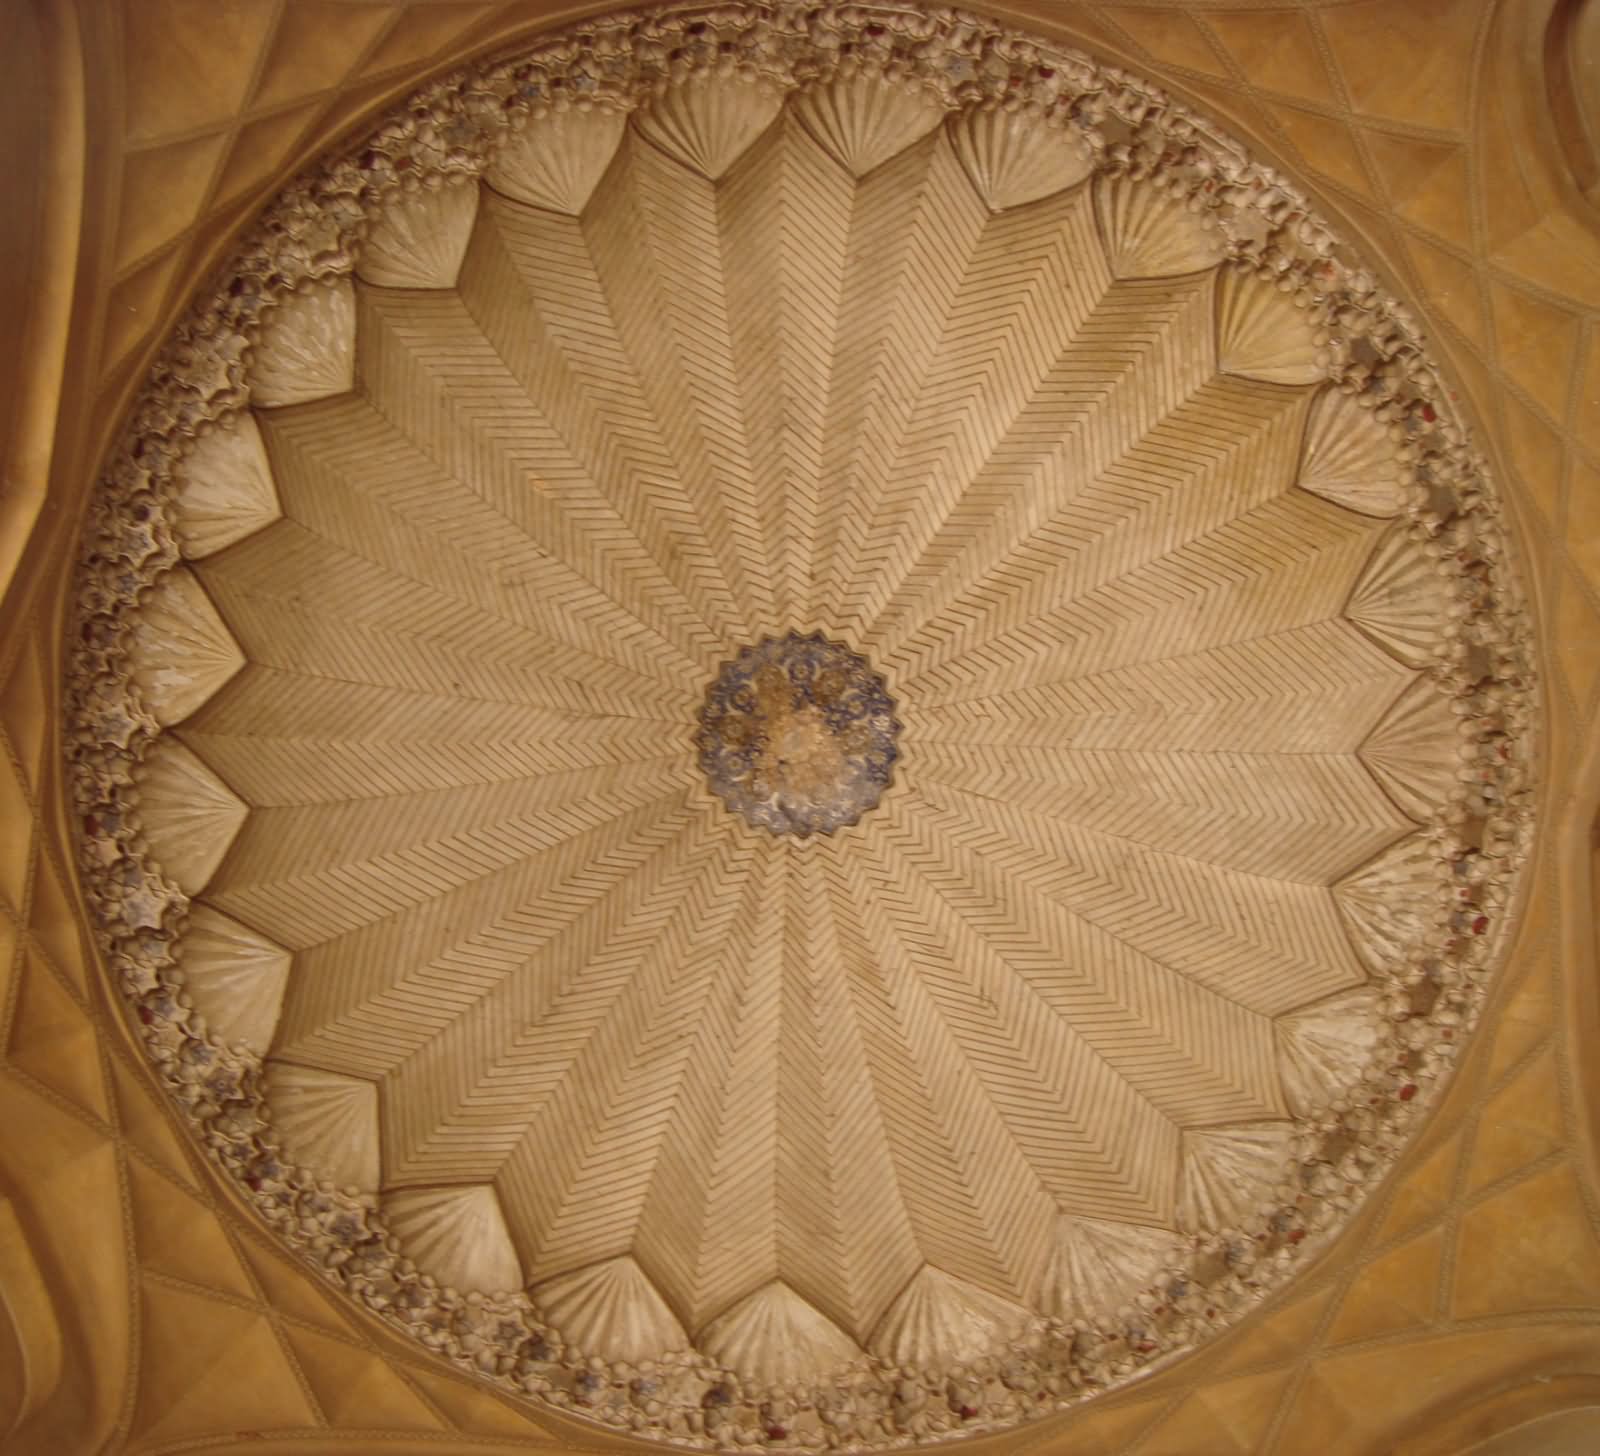 A Beautiful Dome Inside Humayun's Tomb